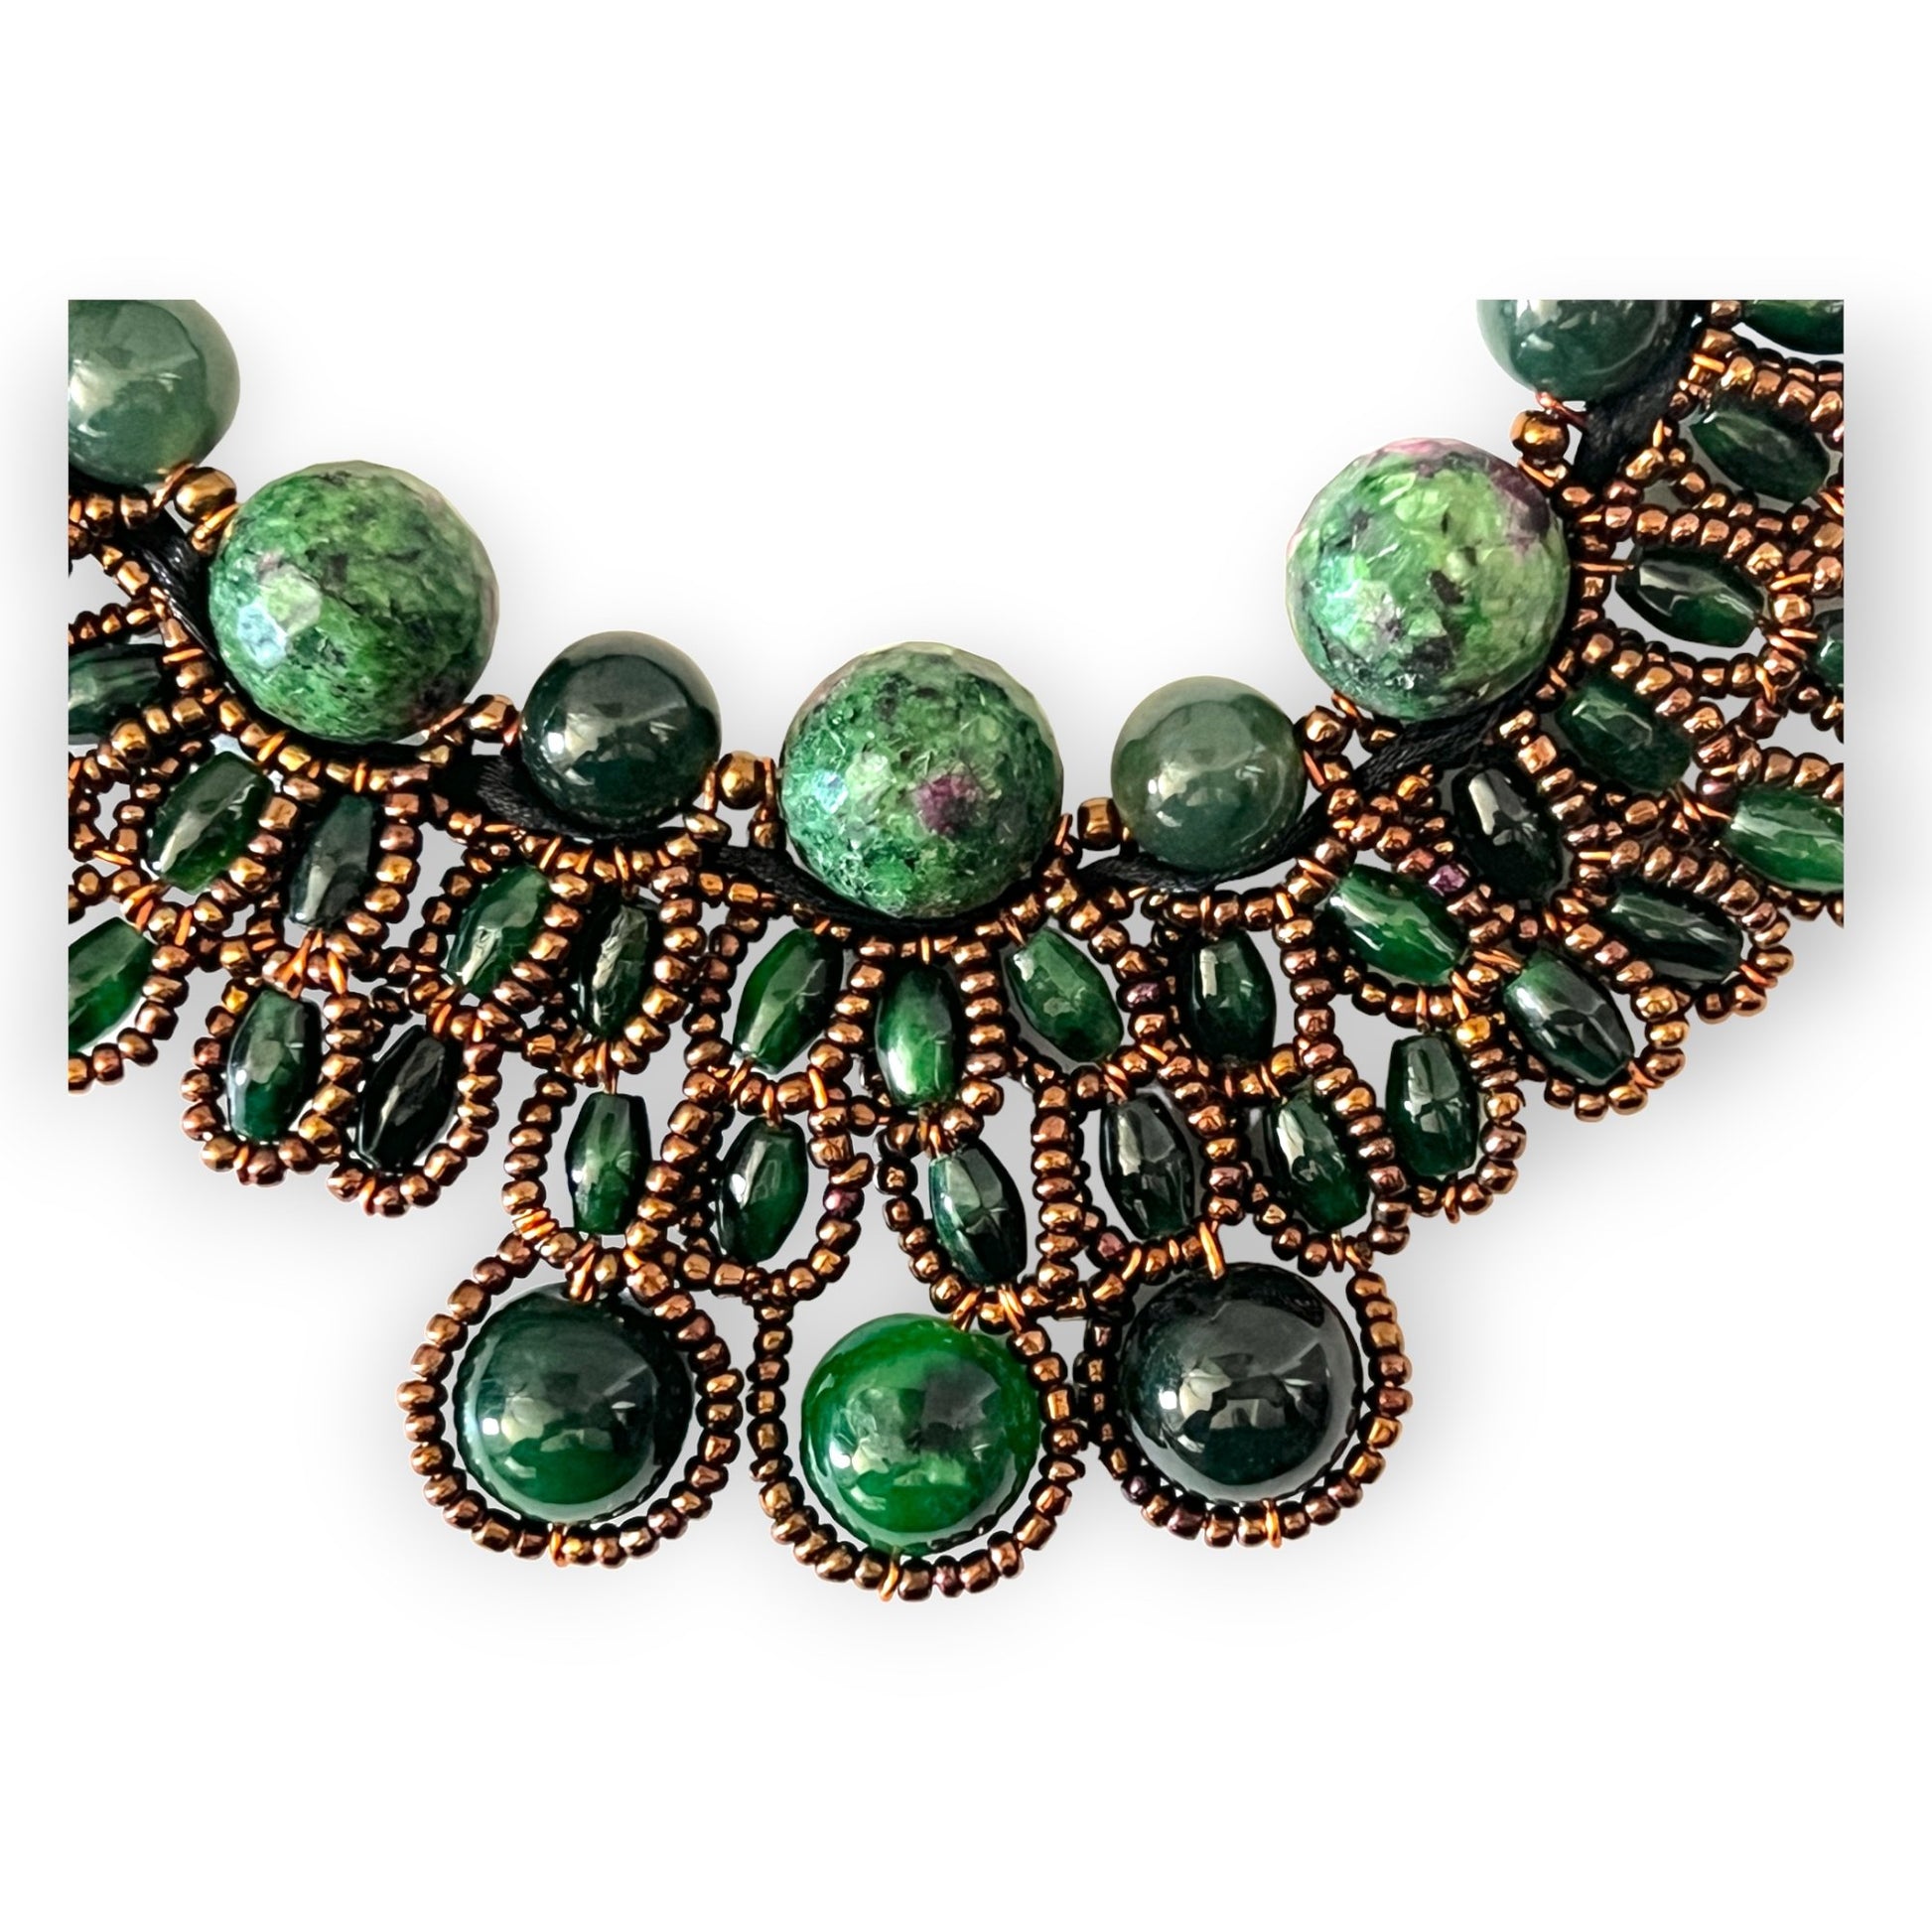 Green jade collar statement necklaceSundara Joon